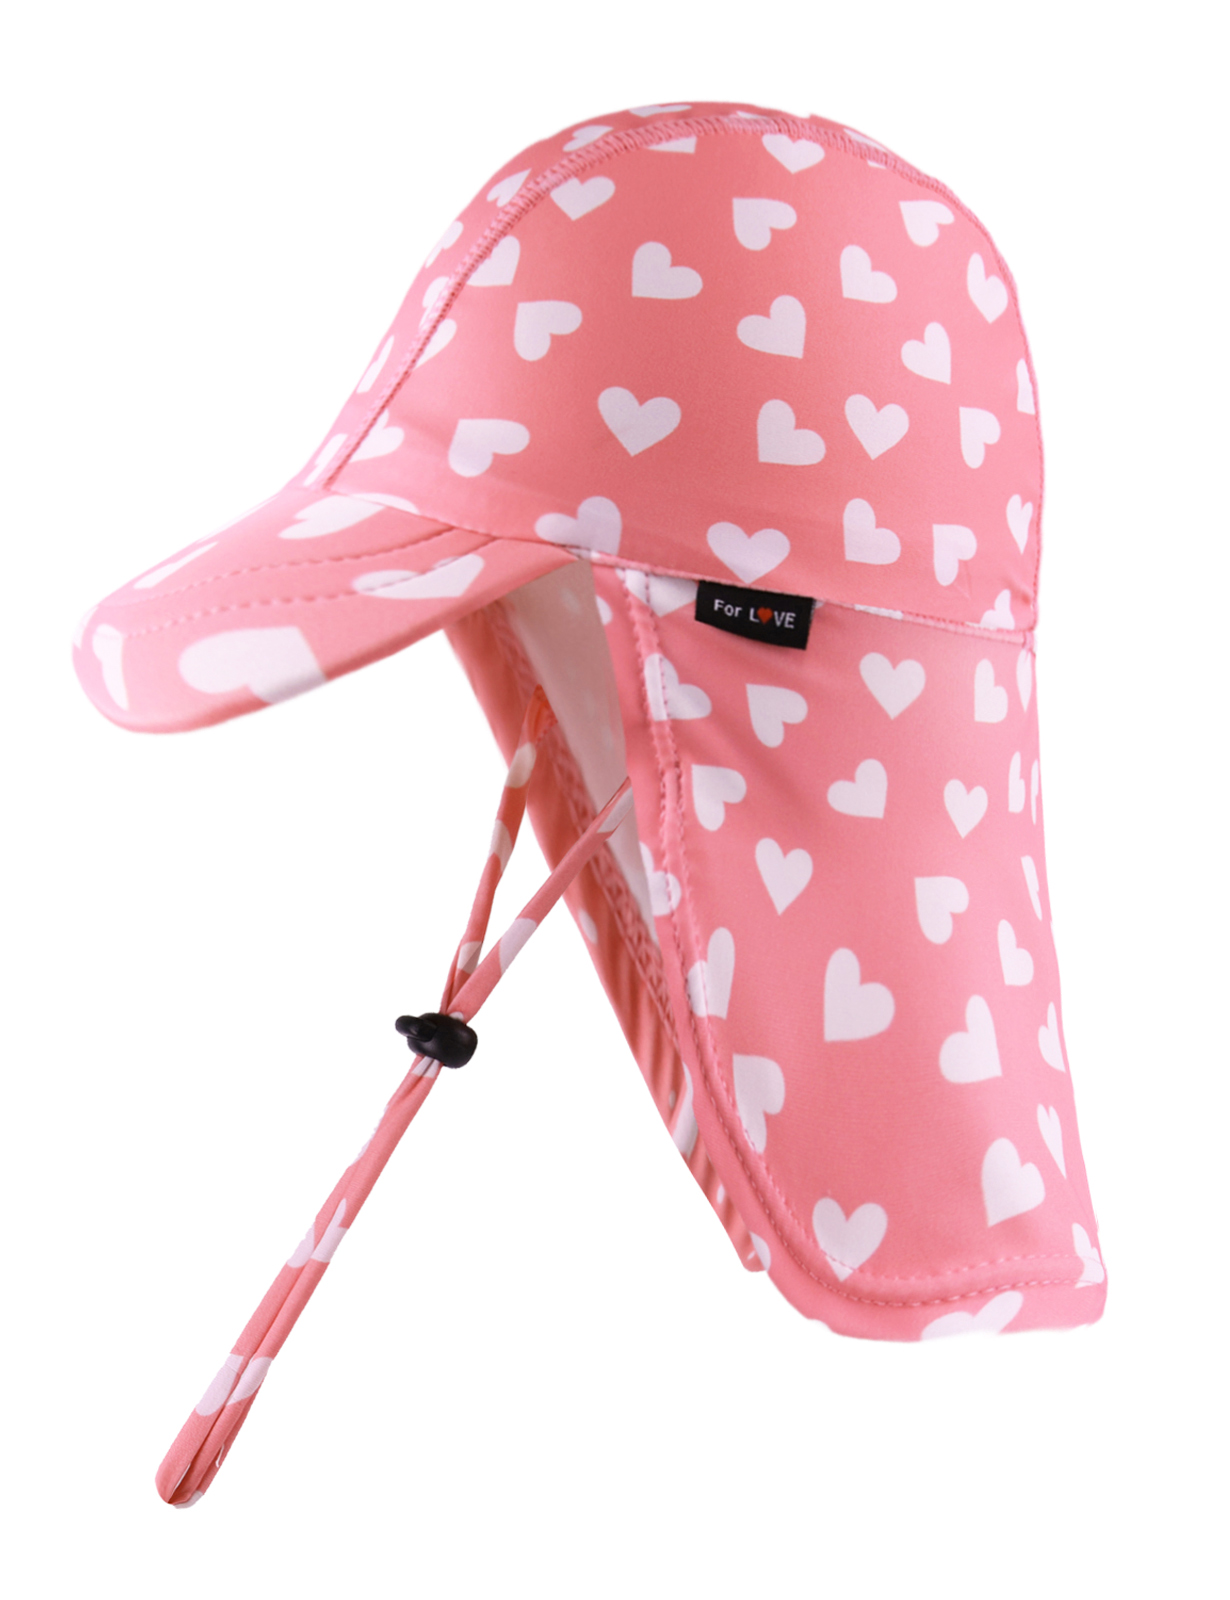 UAM-074(0-6M)weVSwe Baby Swim Hat UV Girls Sun Hat Newborn with String UPF 50+ Summer Neck Flap Cap Pink Heart 0-6 Month